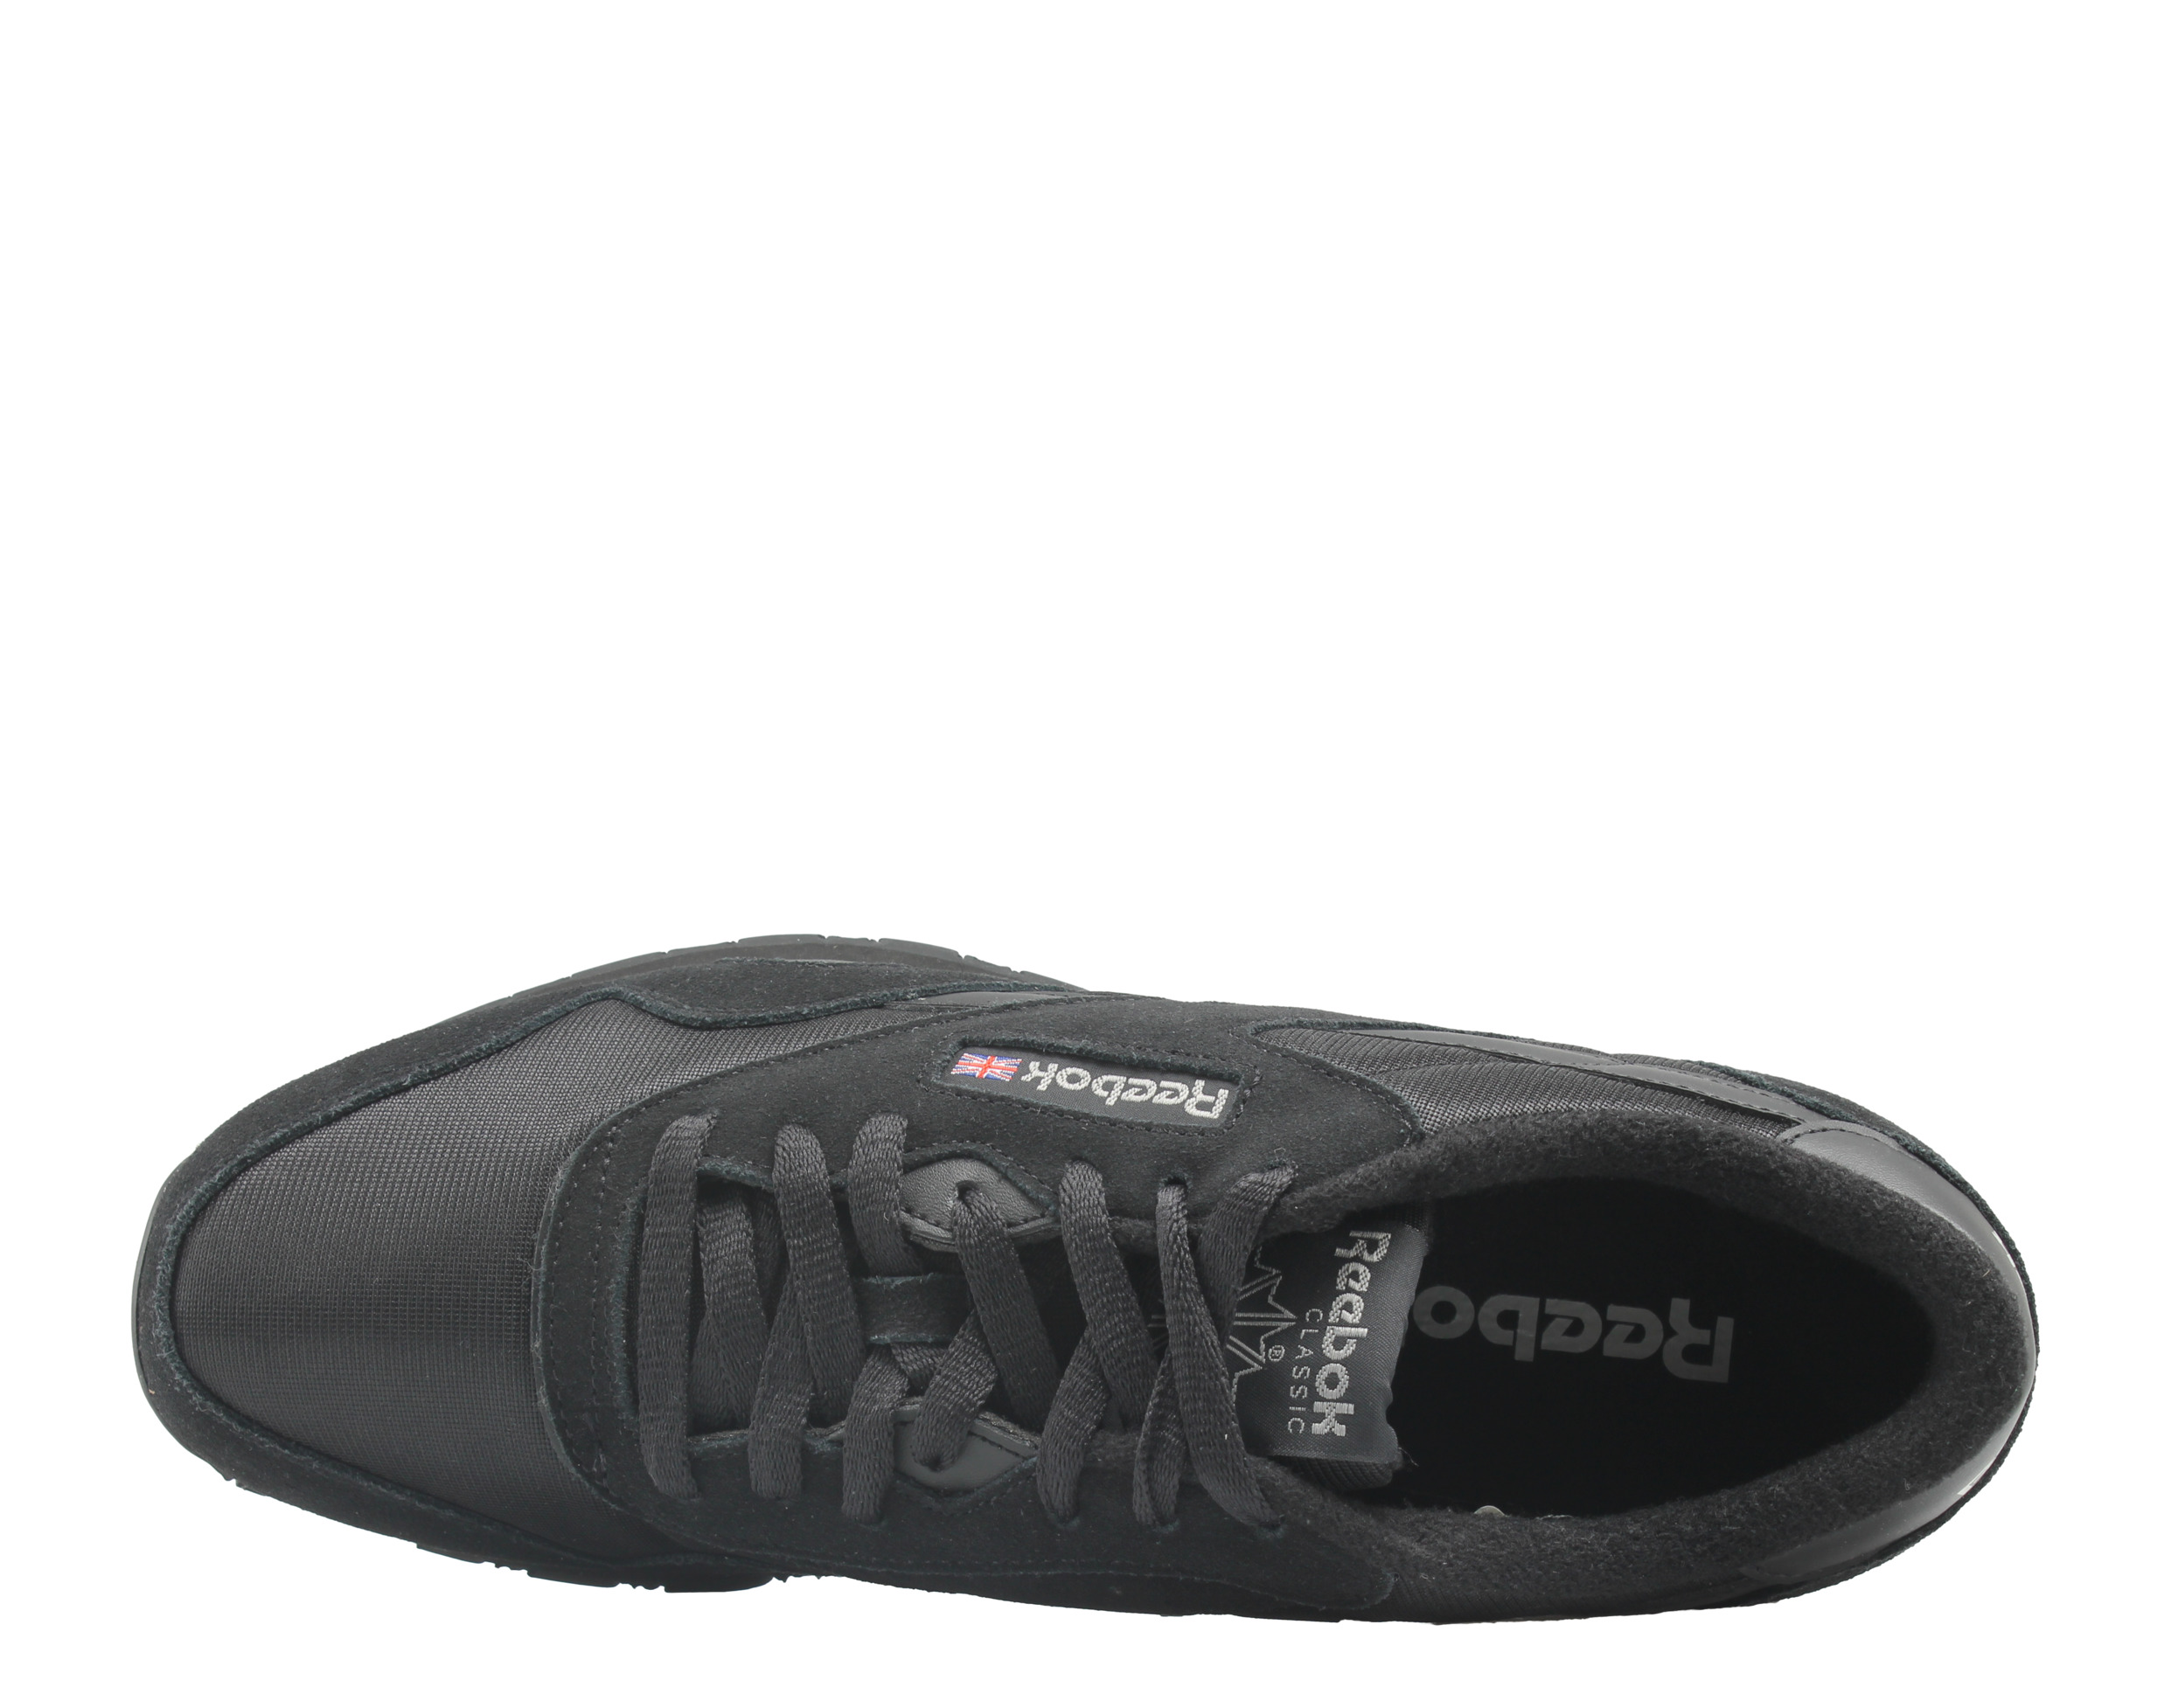 Reebok Classic Nylon Men's Running Shoes Size 11 - image 4 of 6